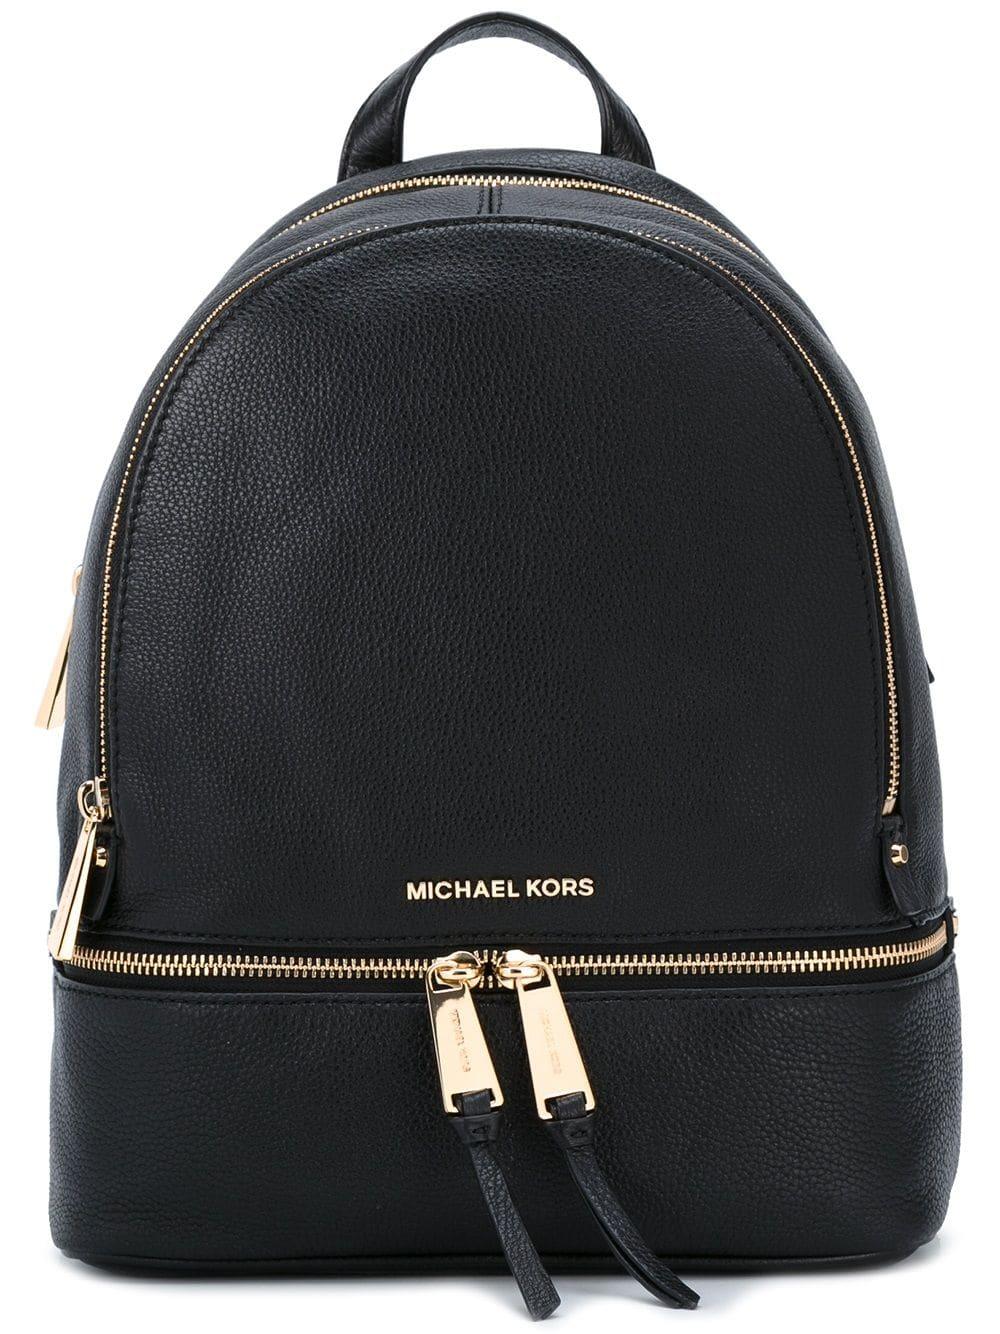 MICHAEL Michael Kors Leather Rhea Backpack in Black - Save 52% - Lyst